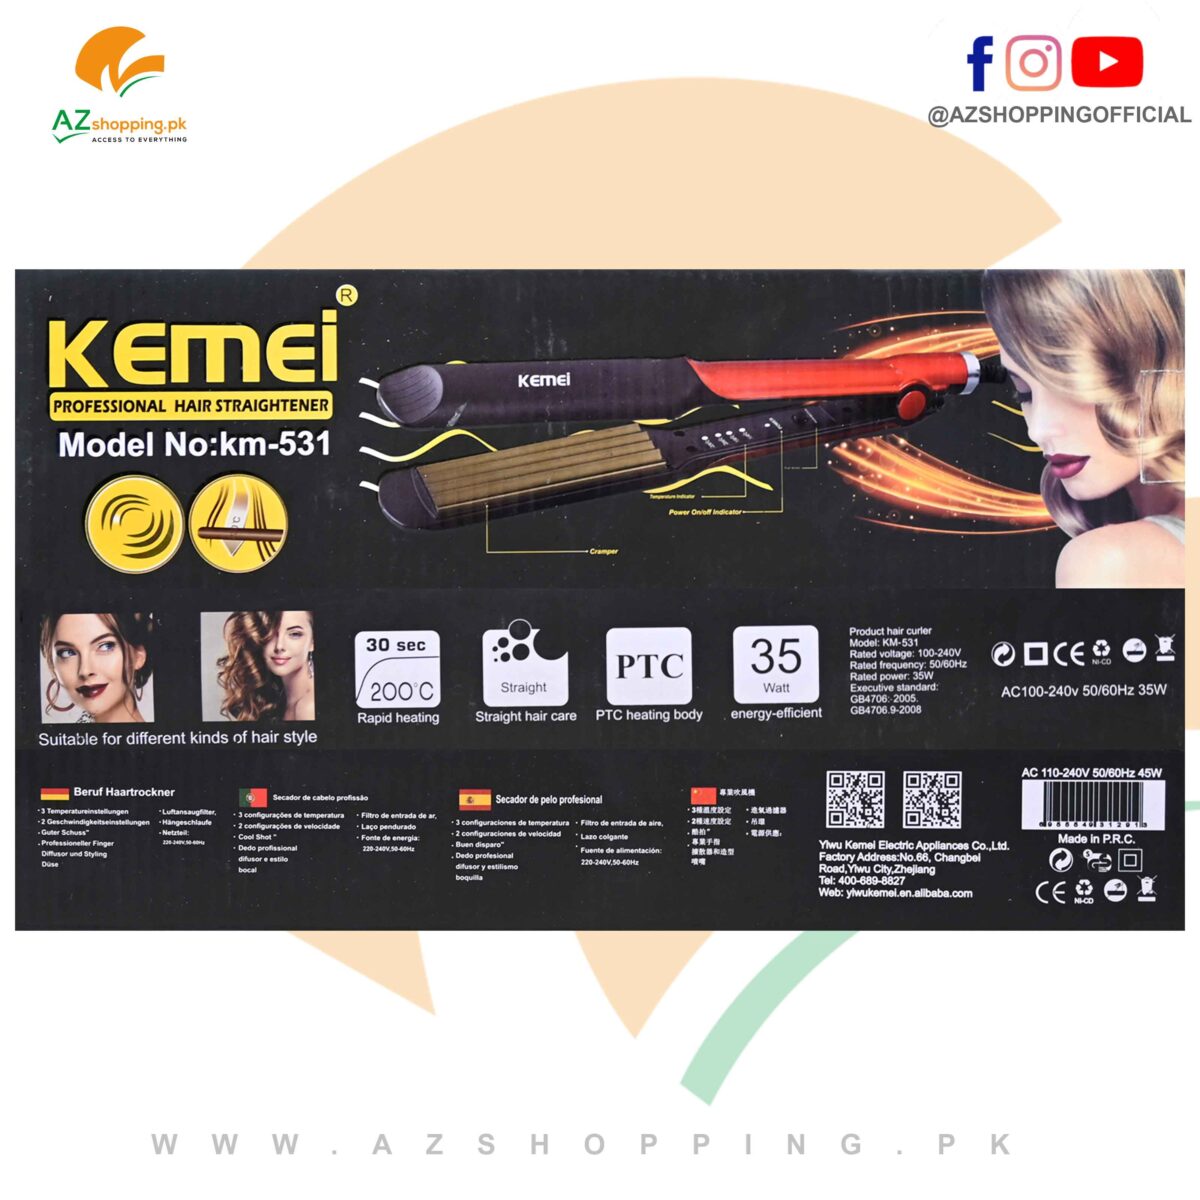 Kemei – 2 in 1 Professional Hair Straightener & Curler with Rapid Heating, PTC Heating Body, 110-240V 50/60Hz 35W – Model: KM-531